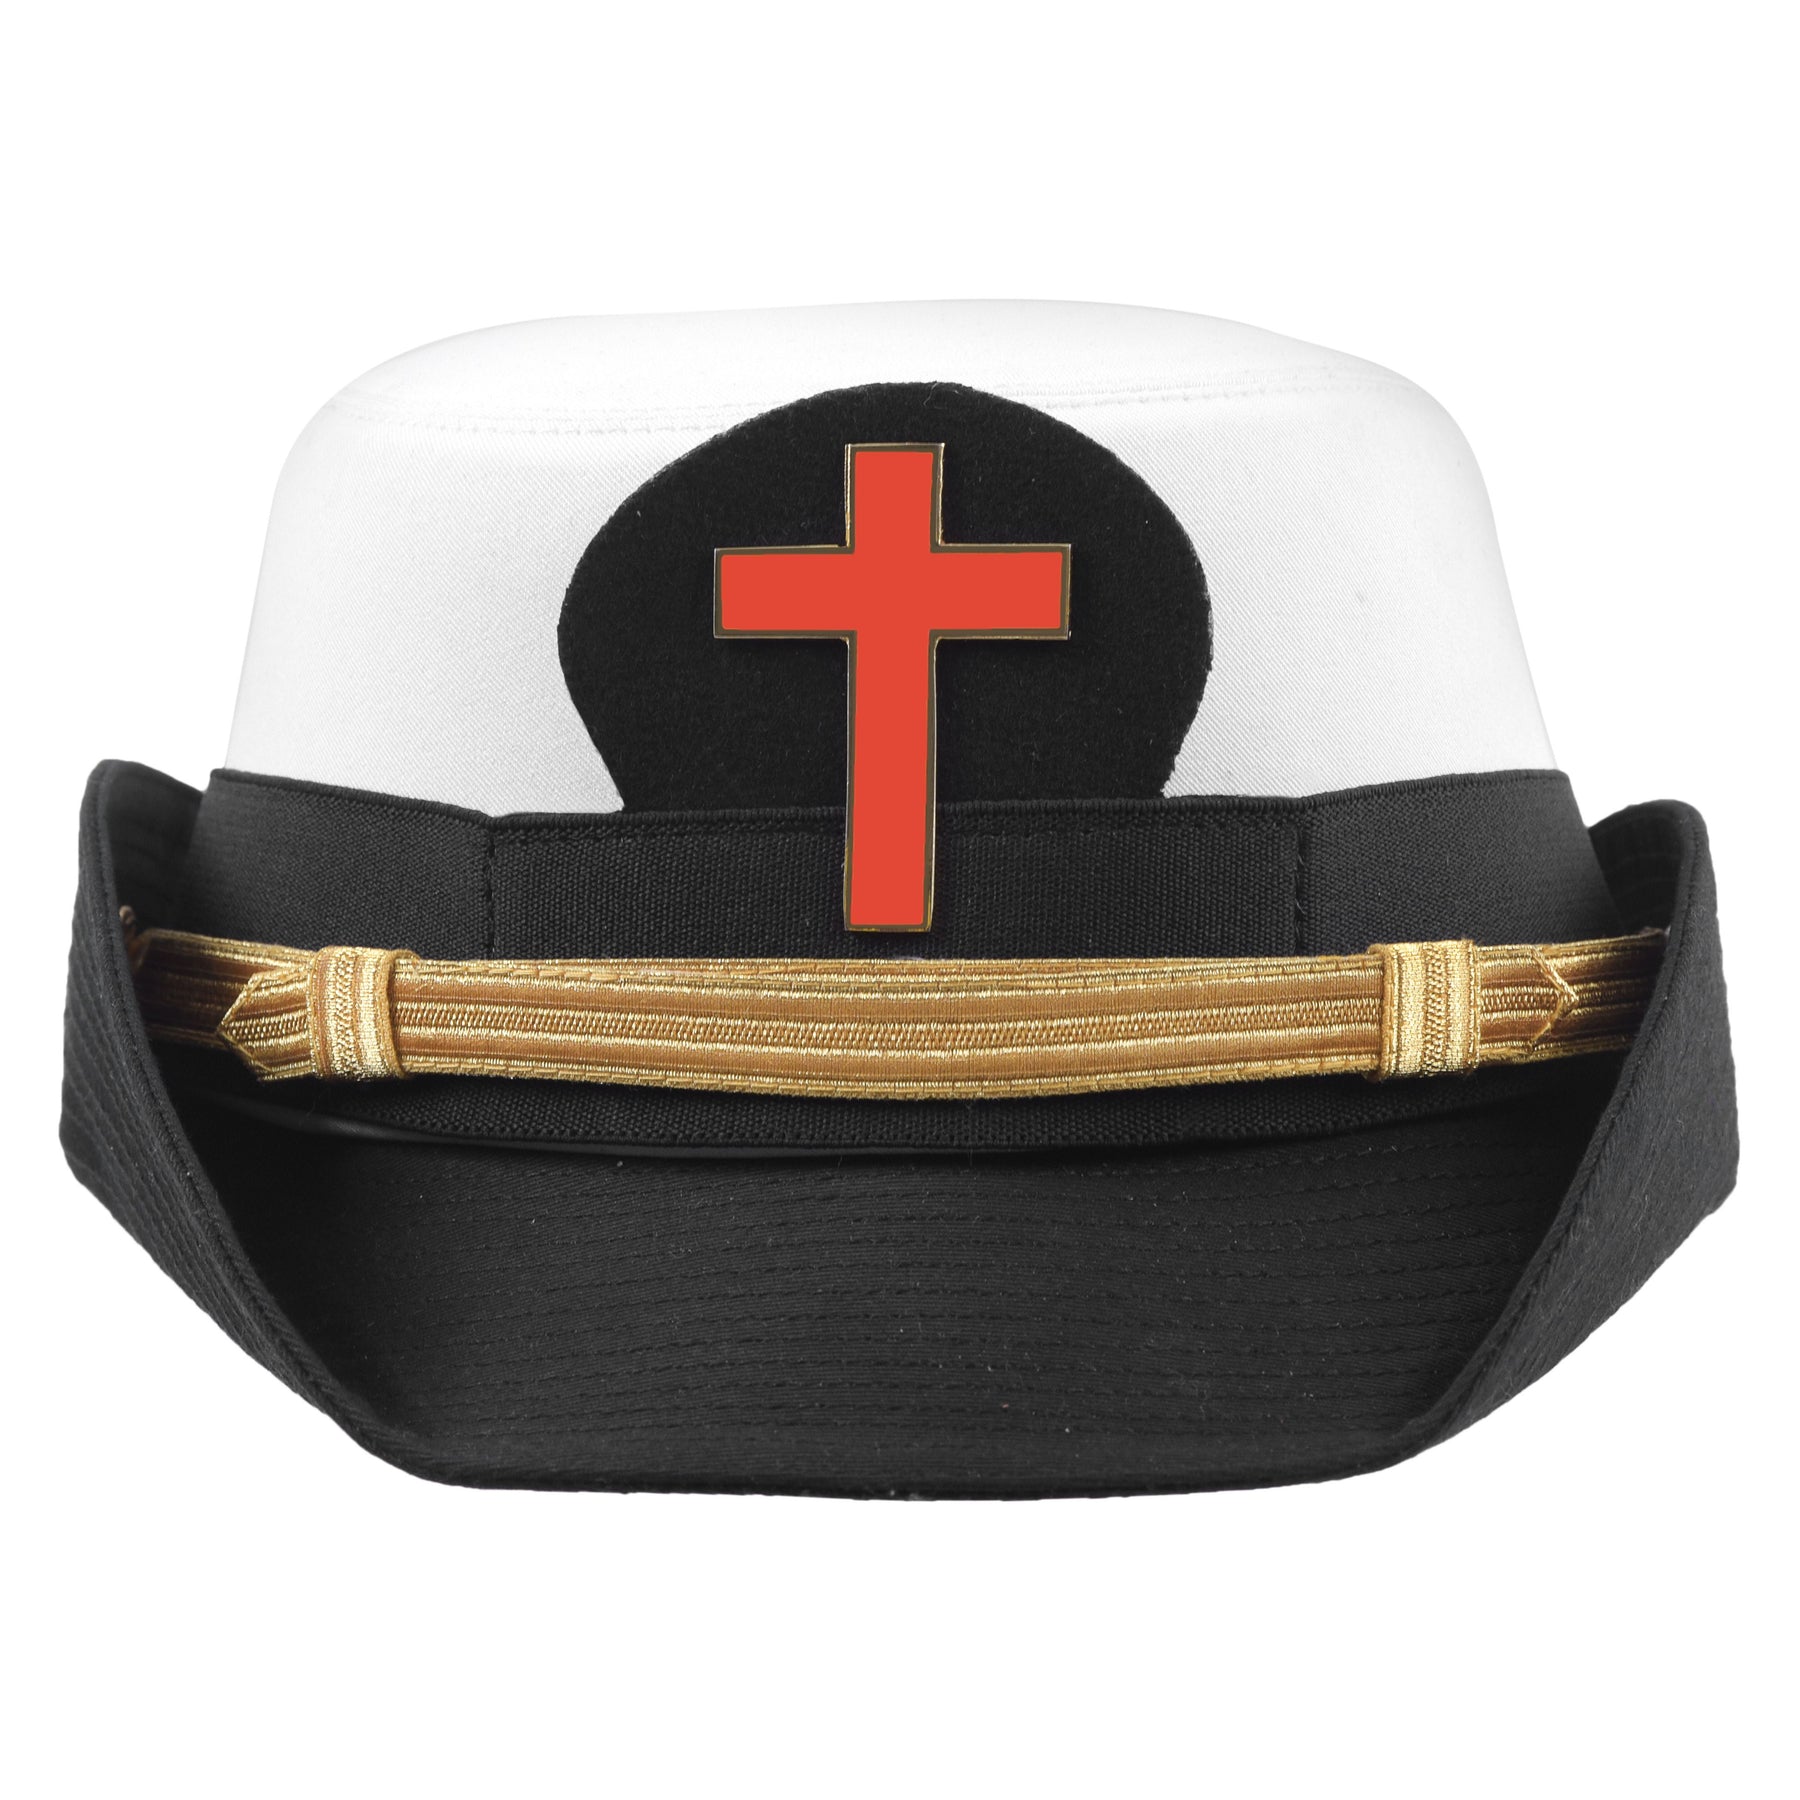 Knights Templar Commandery Fatigue Cap - Red Cross With Gold Strap - Bricks Masons